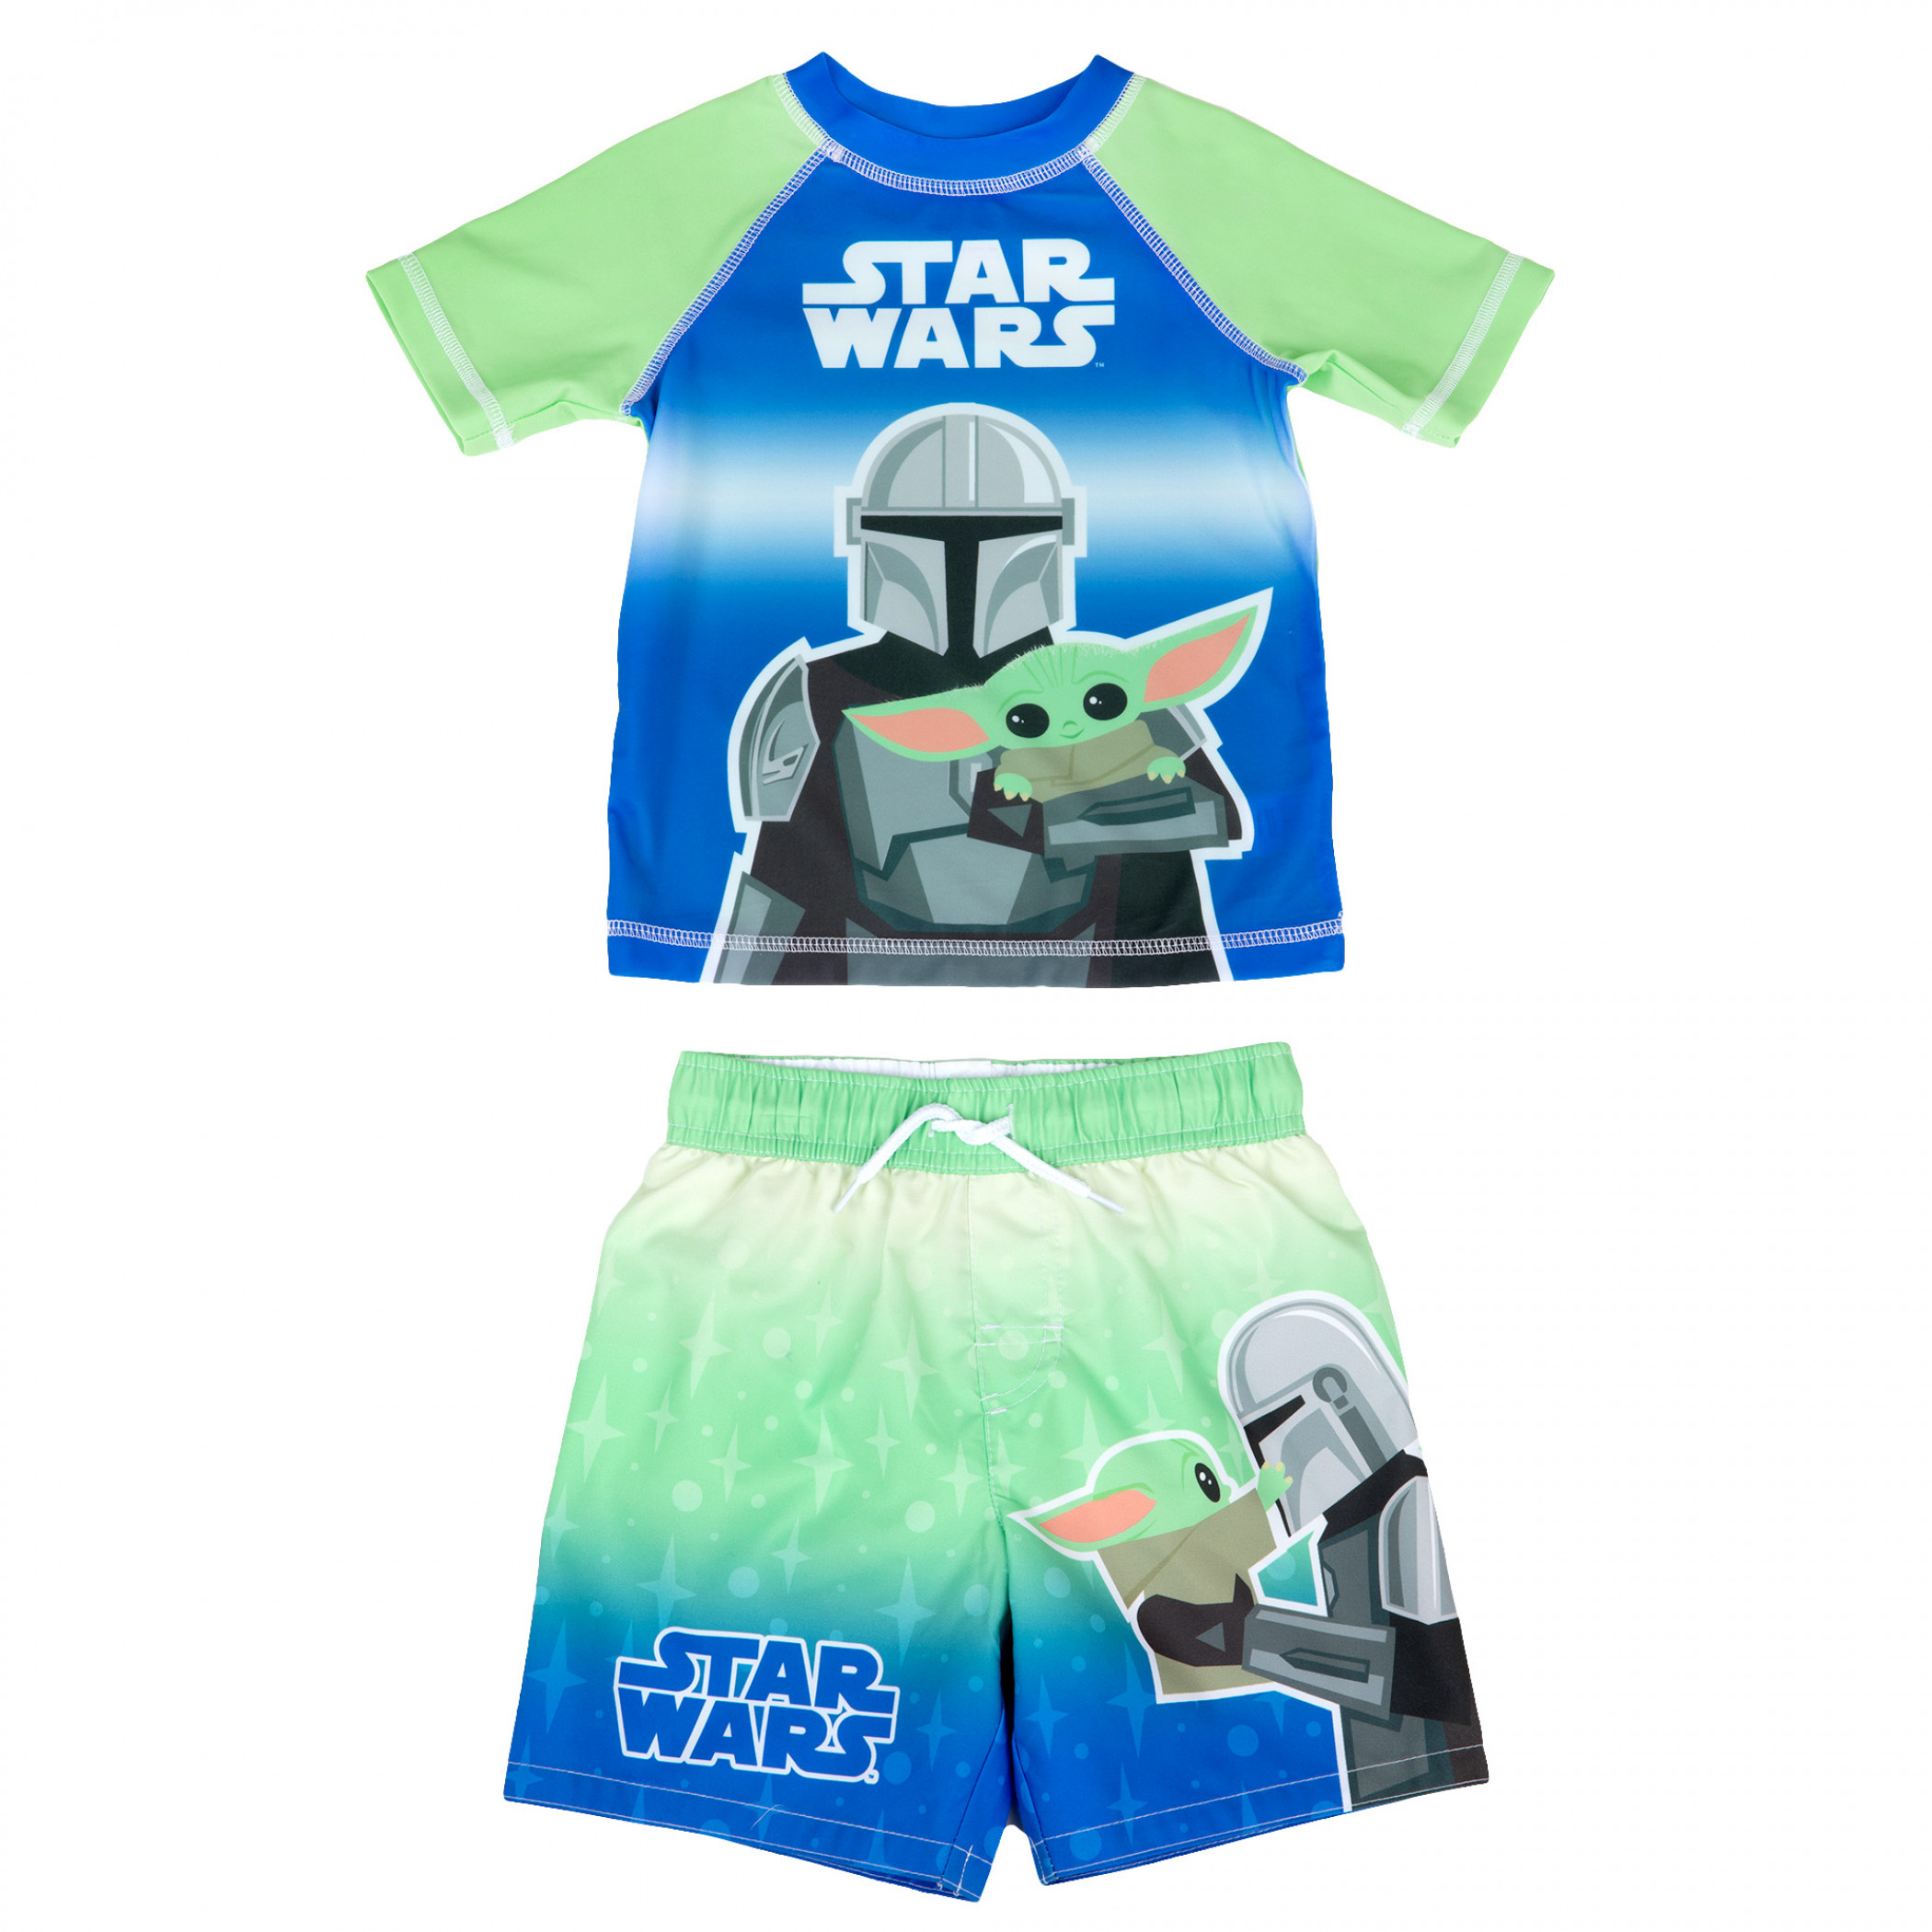 Star Wars The Mandalorian and Grogu Toddler Swimshorts & Rashguard Set